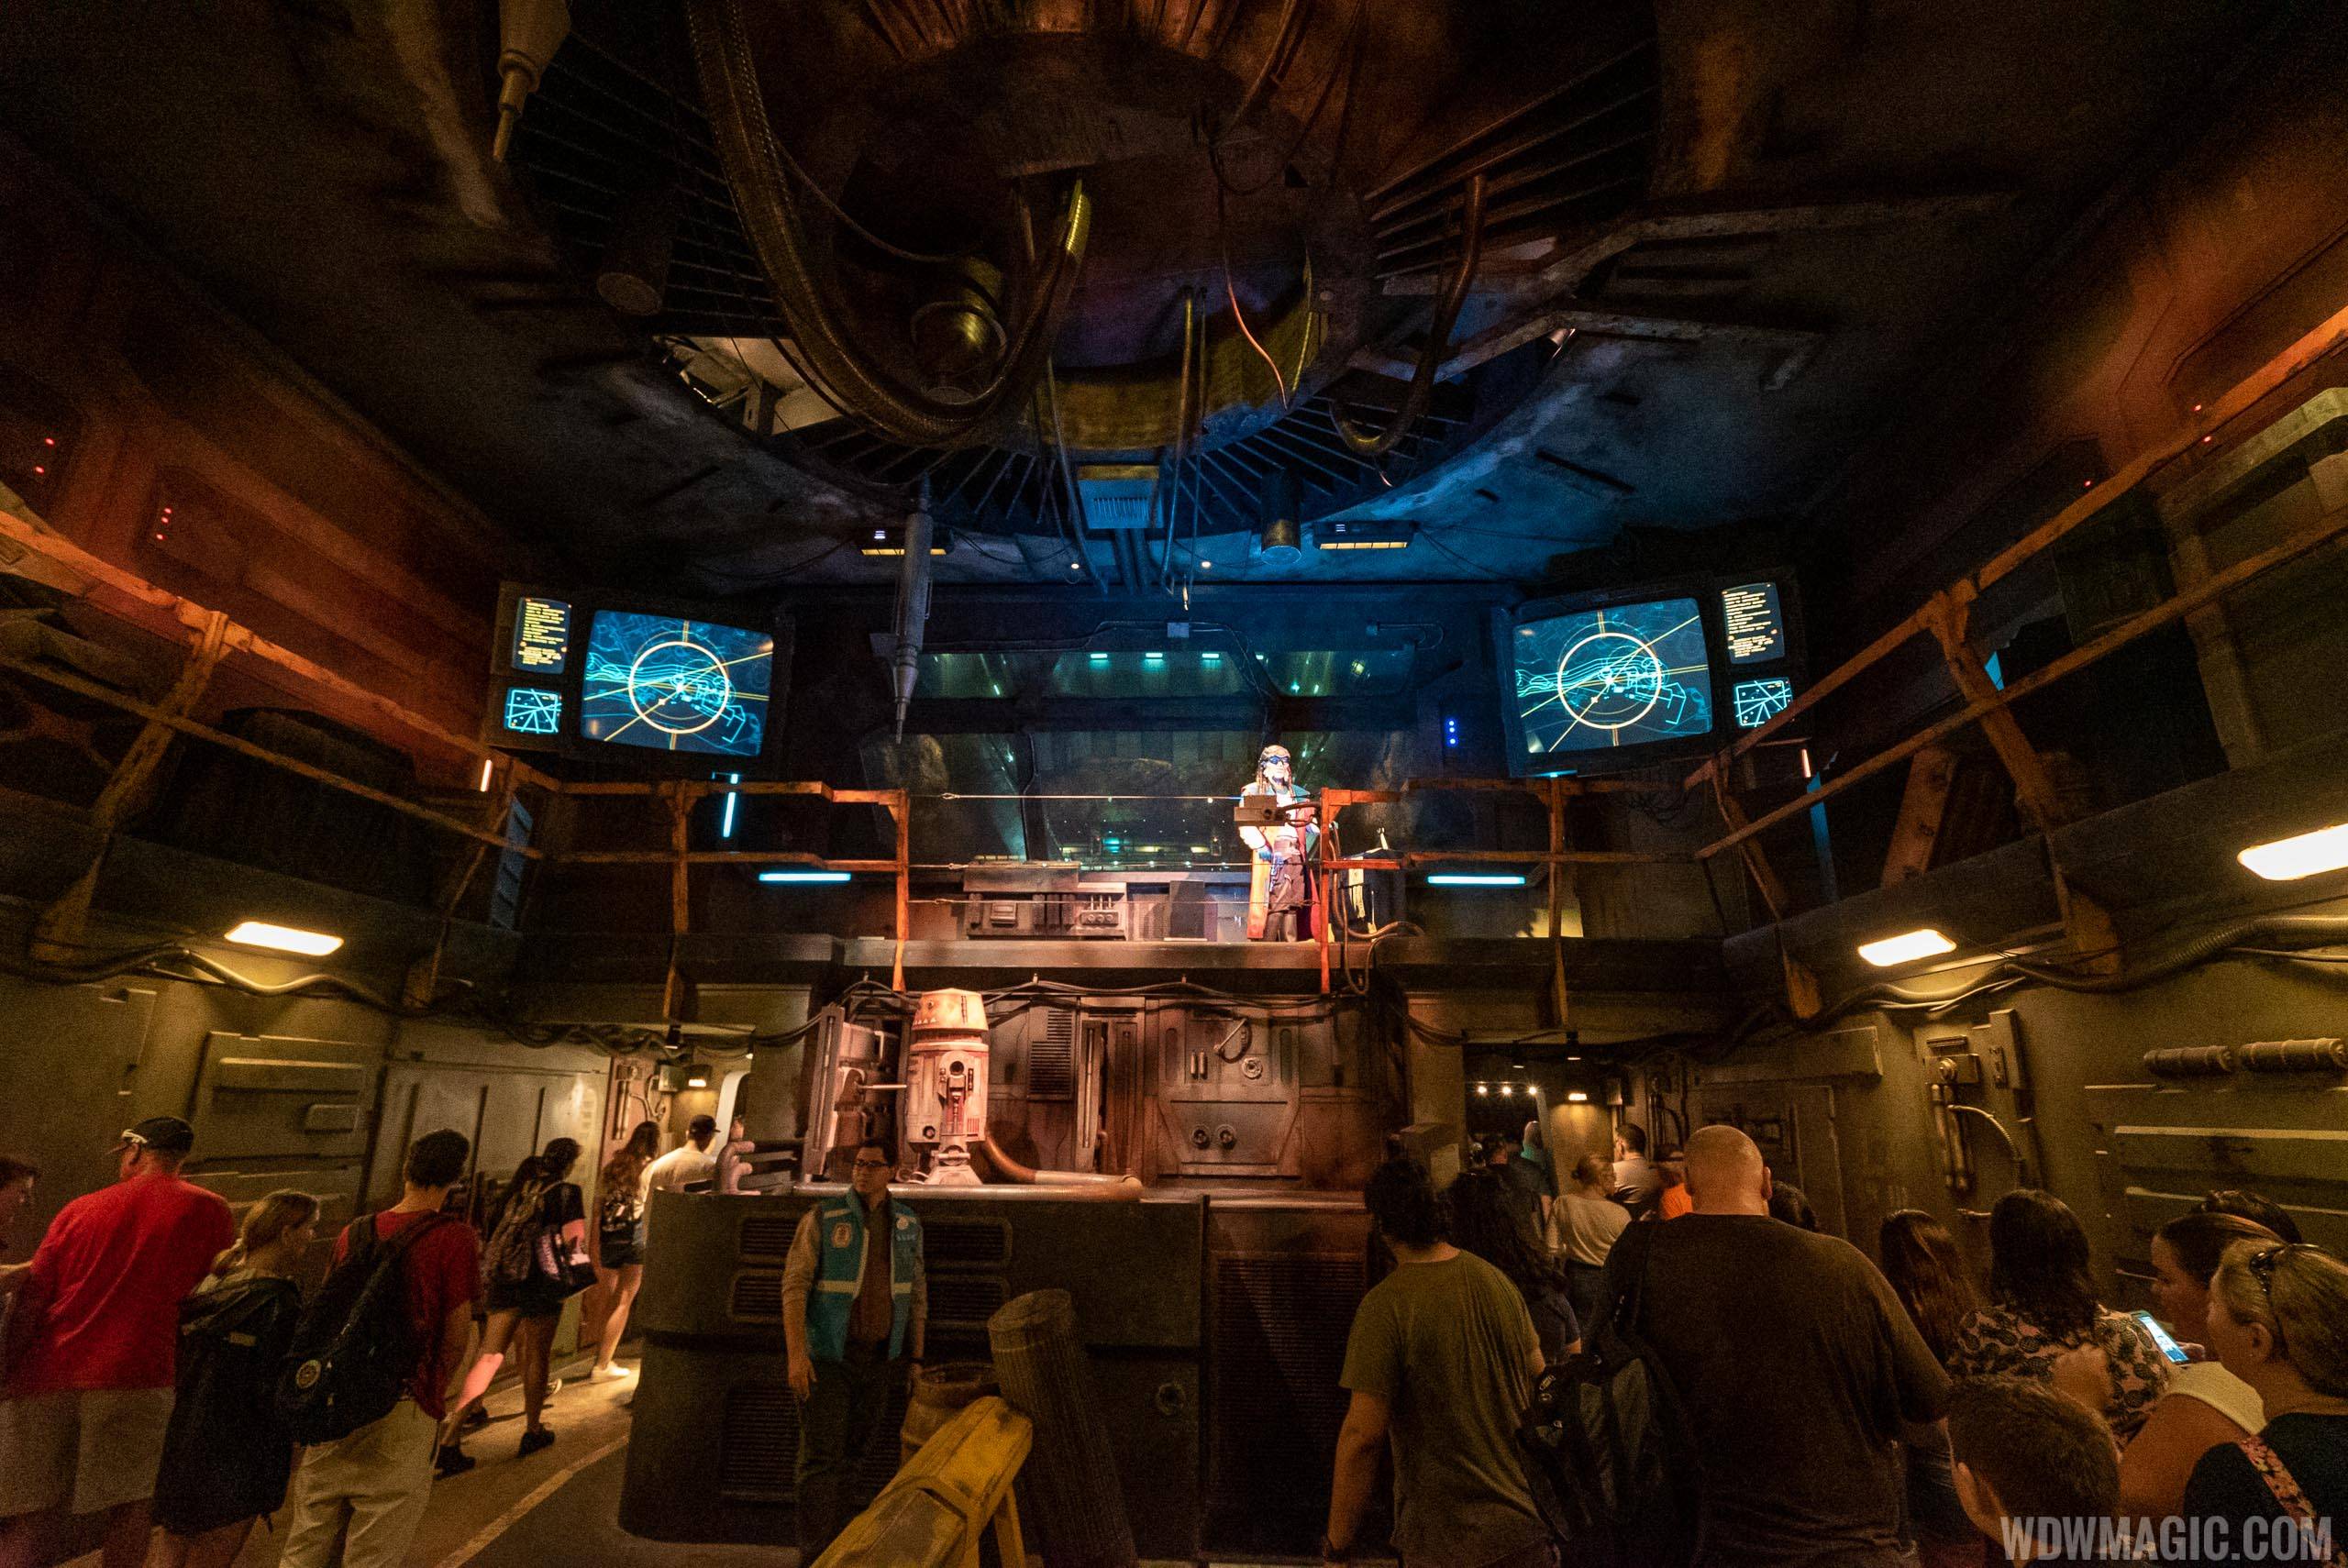 Millennium Falcon Smugglers Run at Disney's Hollywood Studios